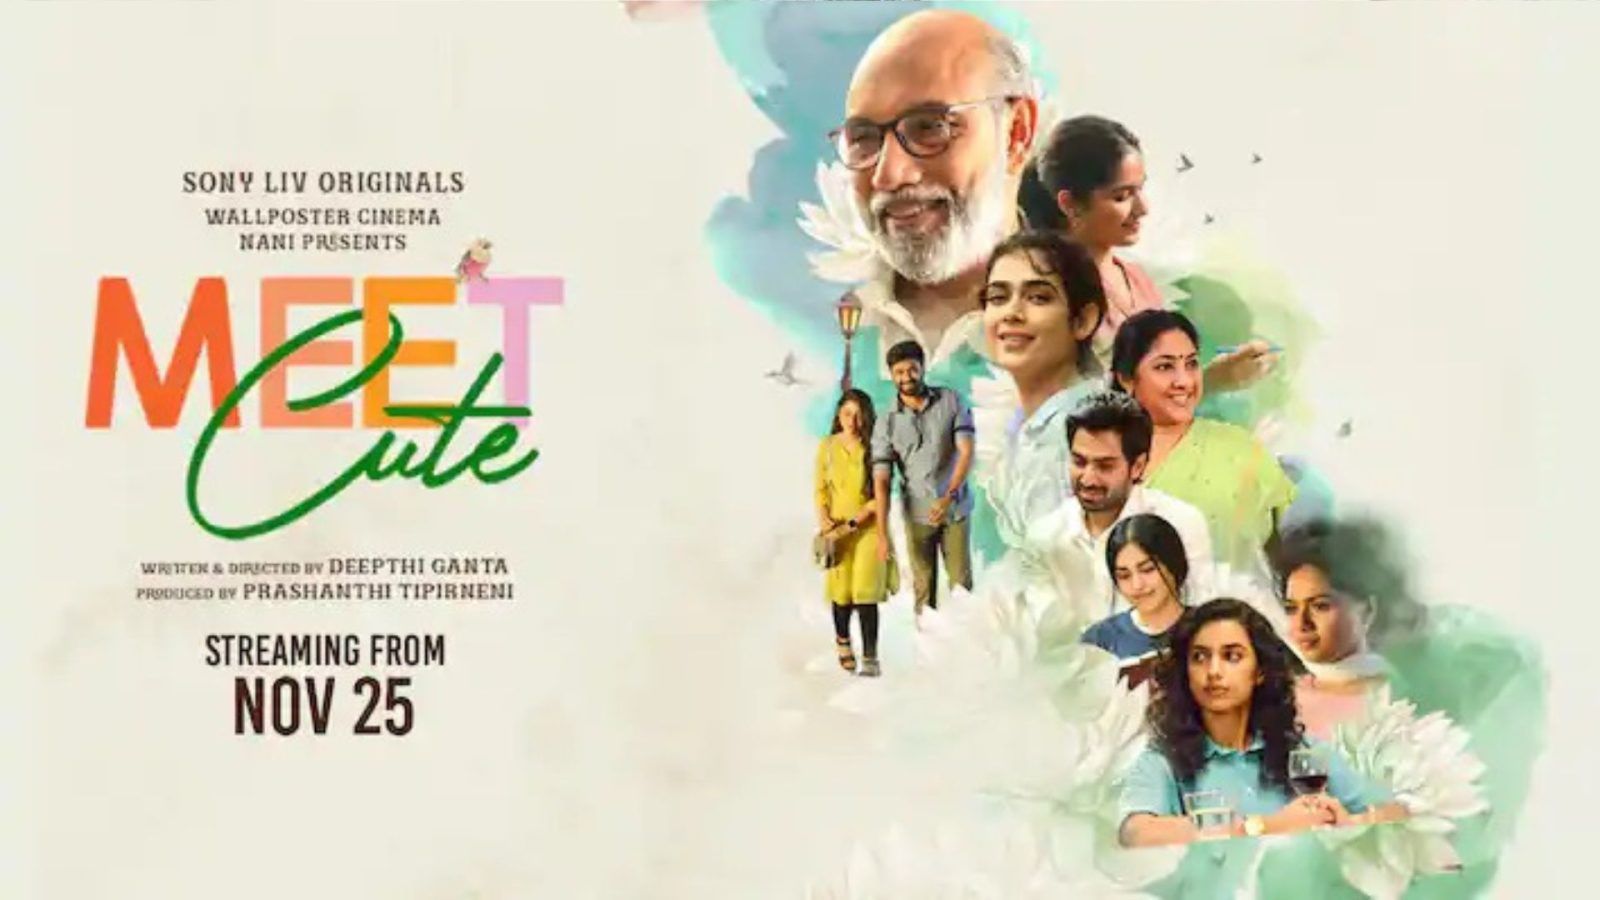 Telugu anthology series Meet Cute to stream on Sony LIV